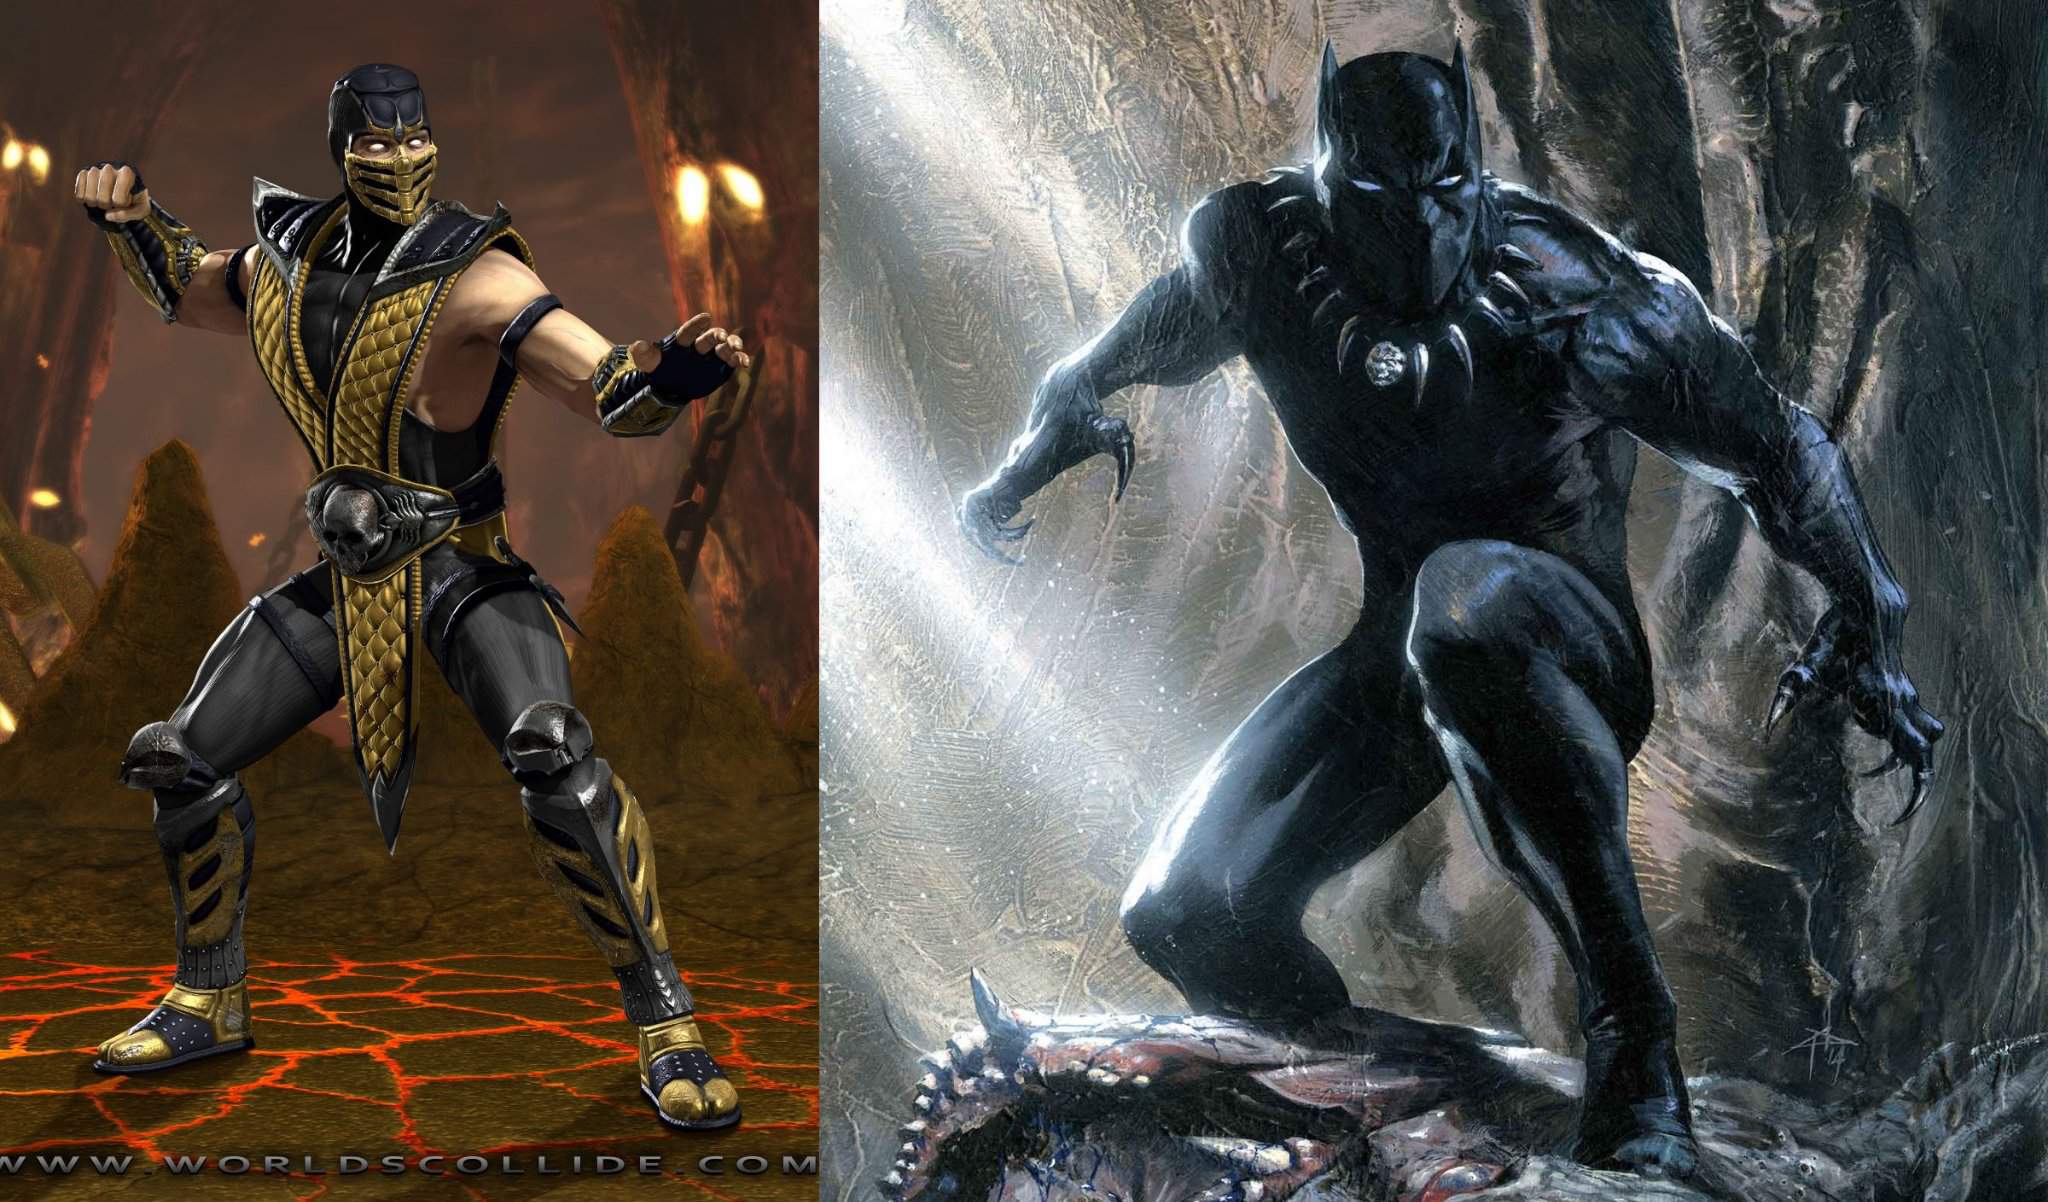 Black panther vs sonic cartoon beatbox battles